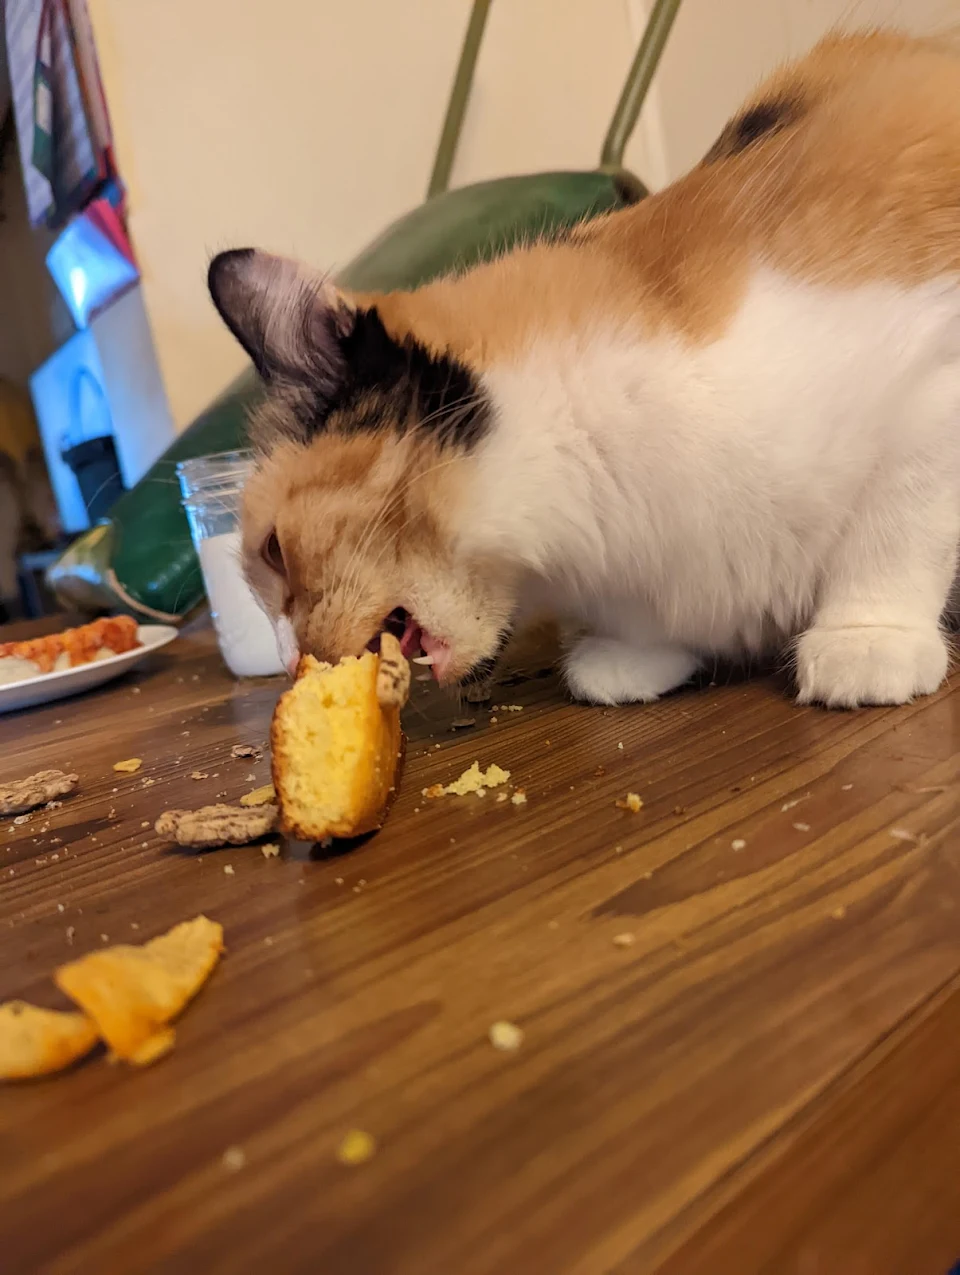 oc anyone else's cat love cornbread!